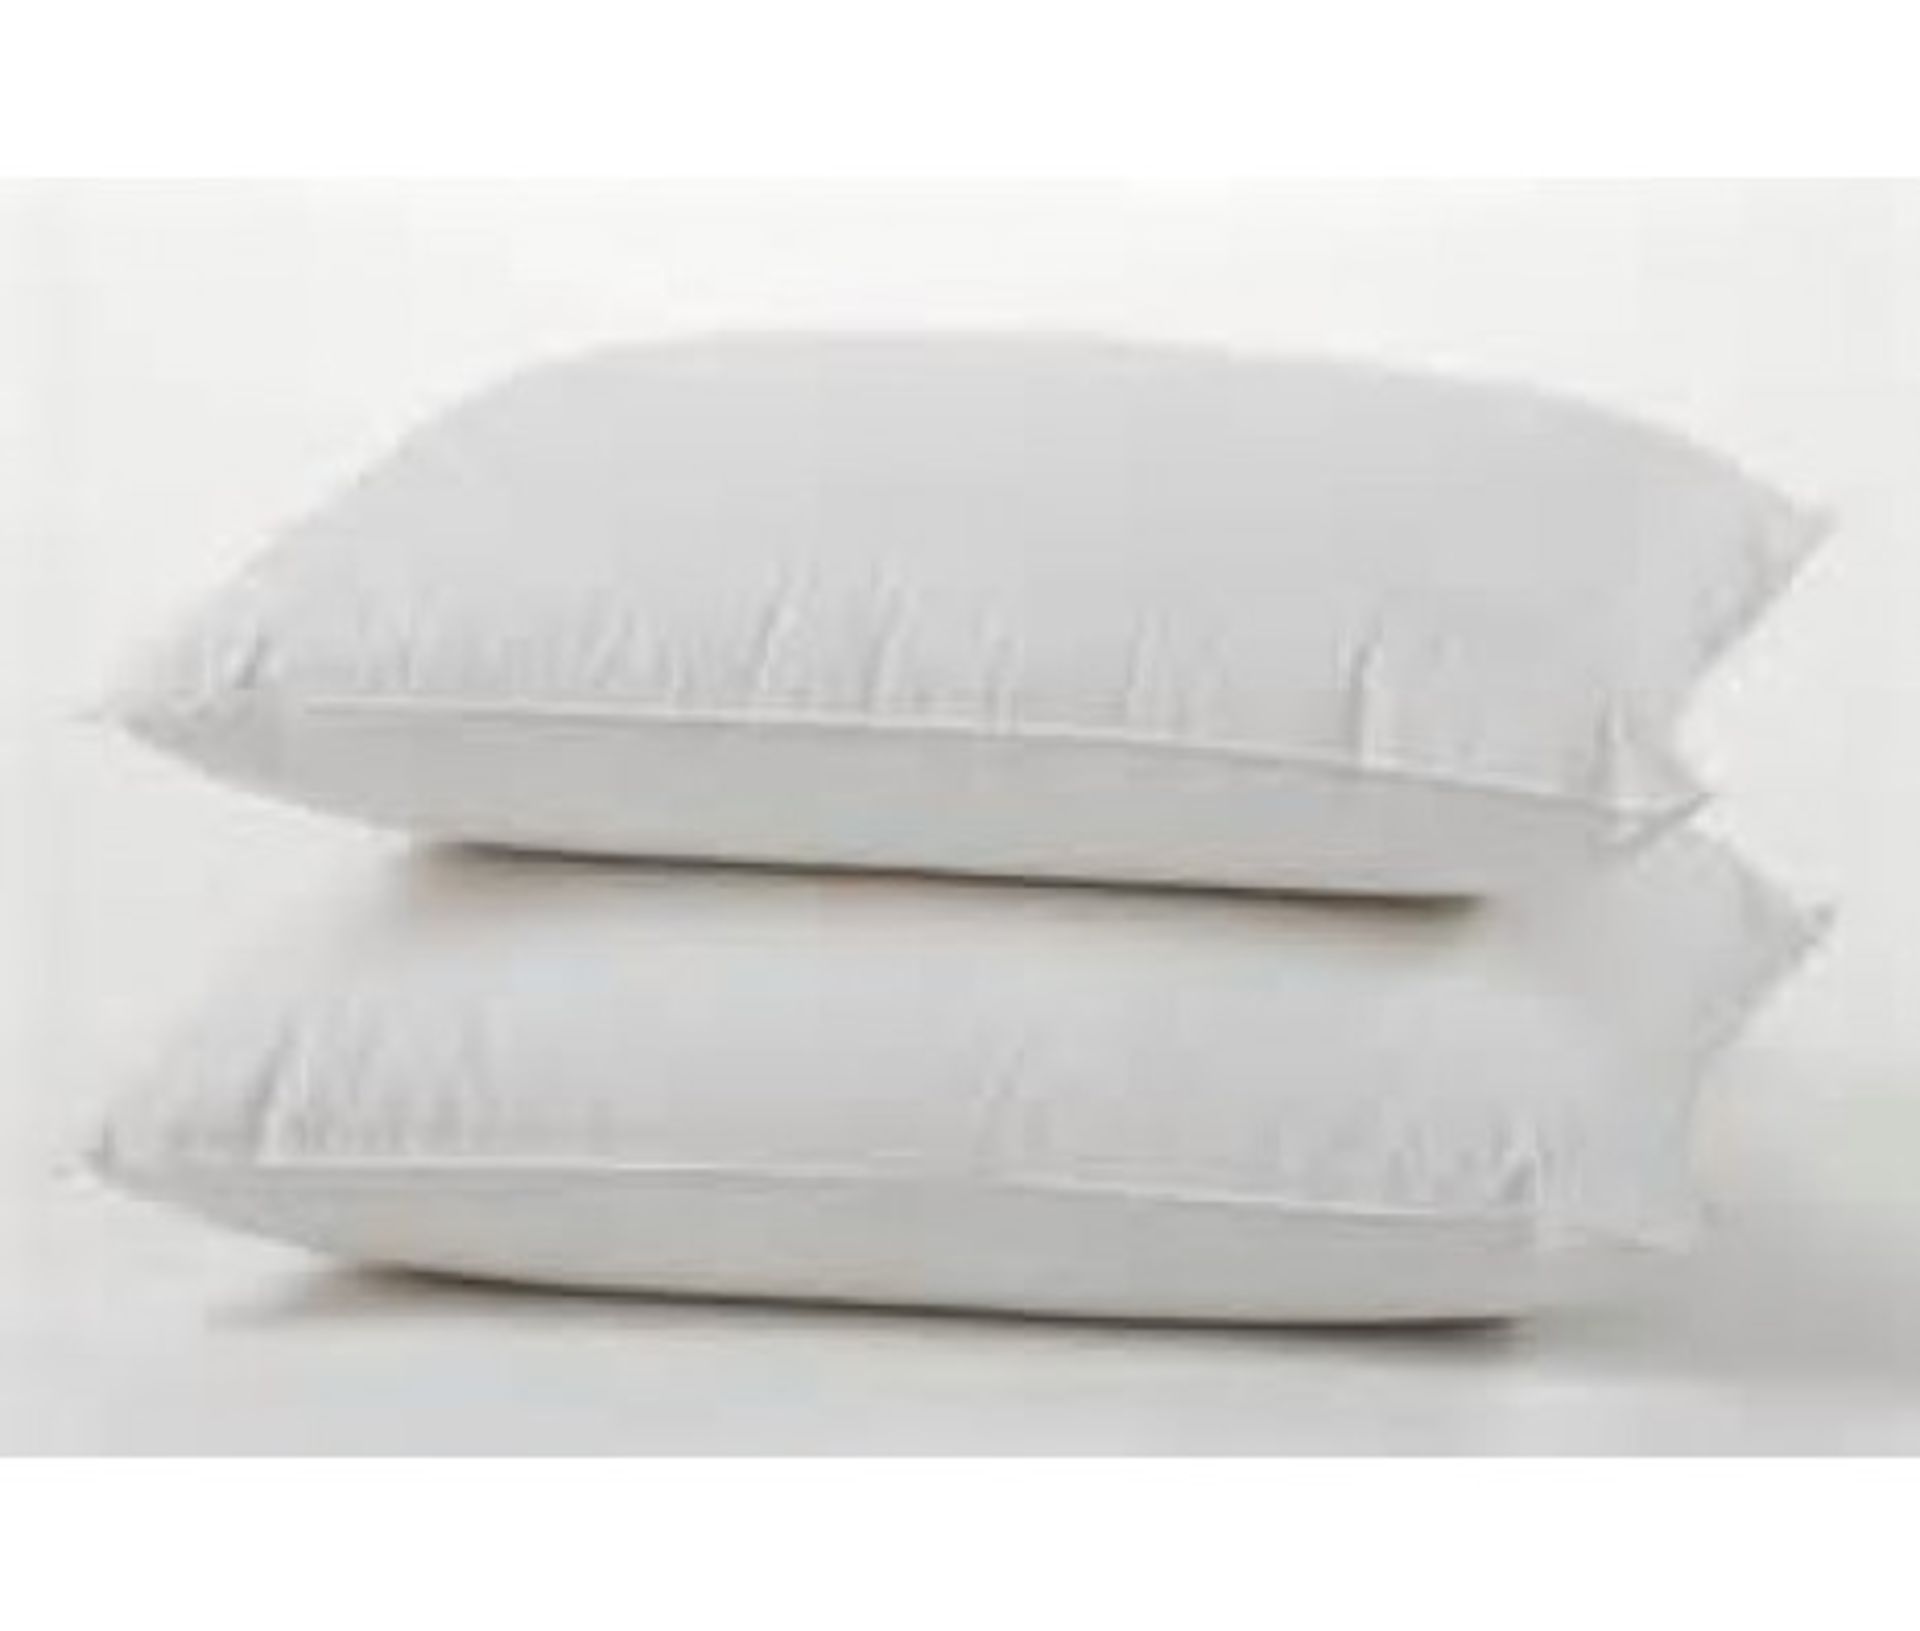 V Brand New Twin Pack Duck Feather & Down Pillows Similar To Debenhams ISP £36 (Debenhams)